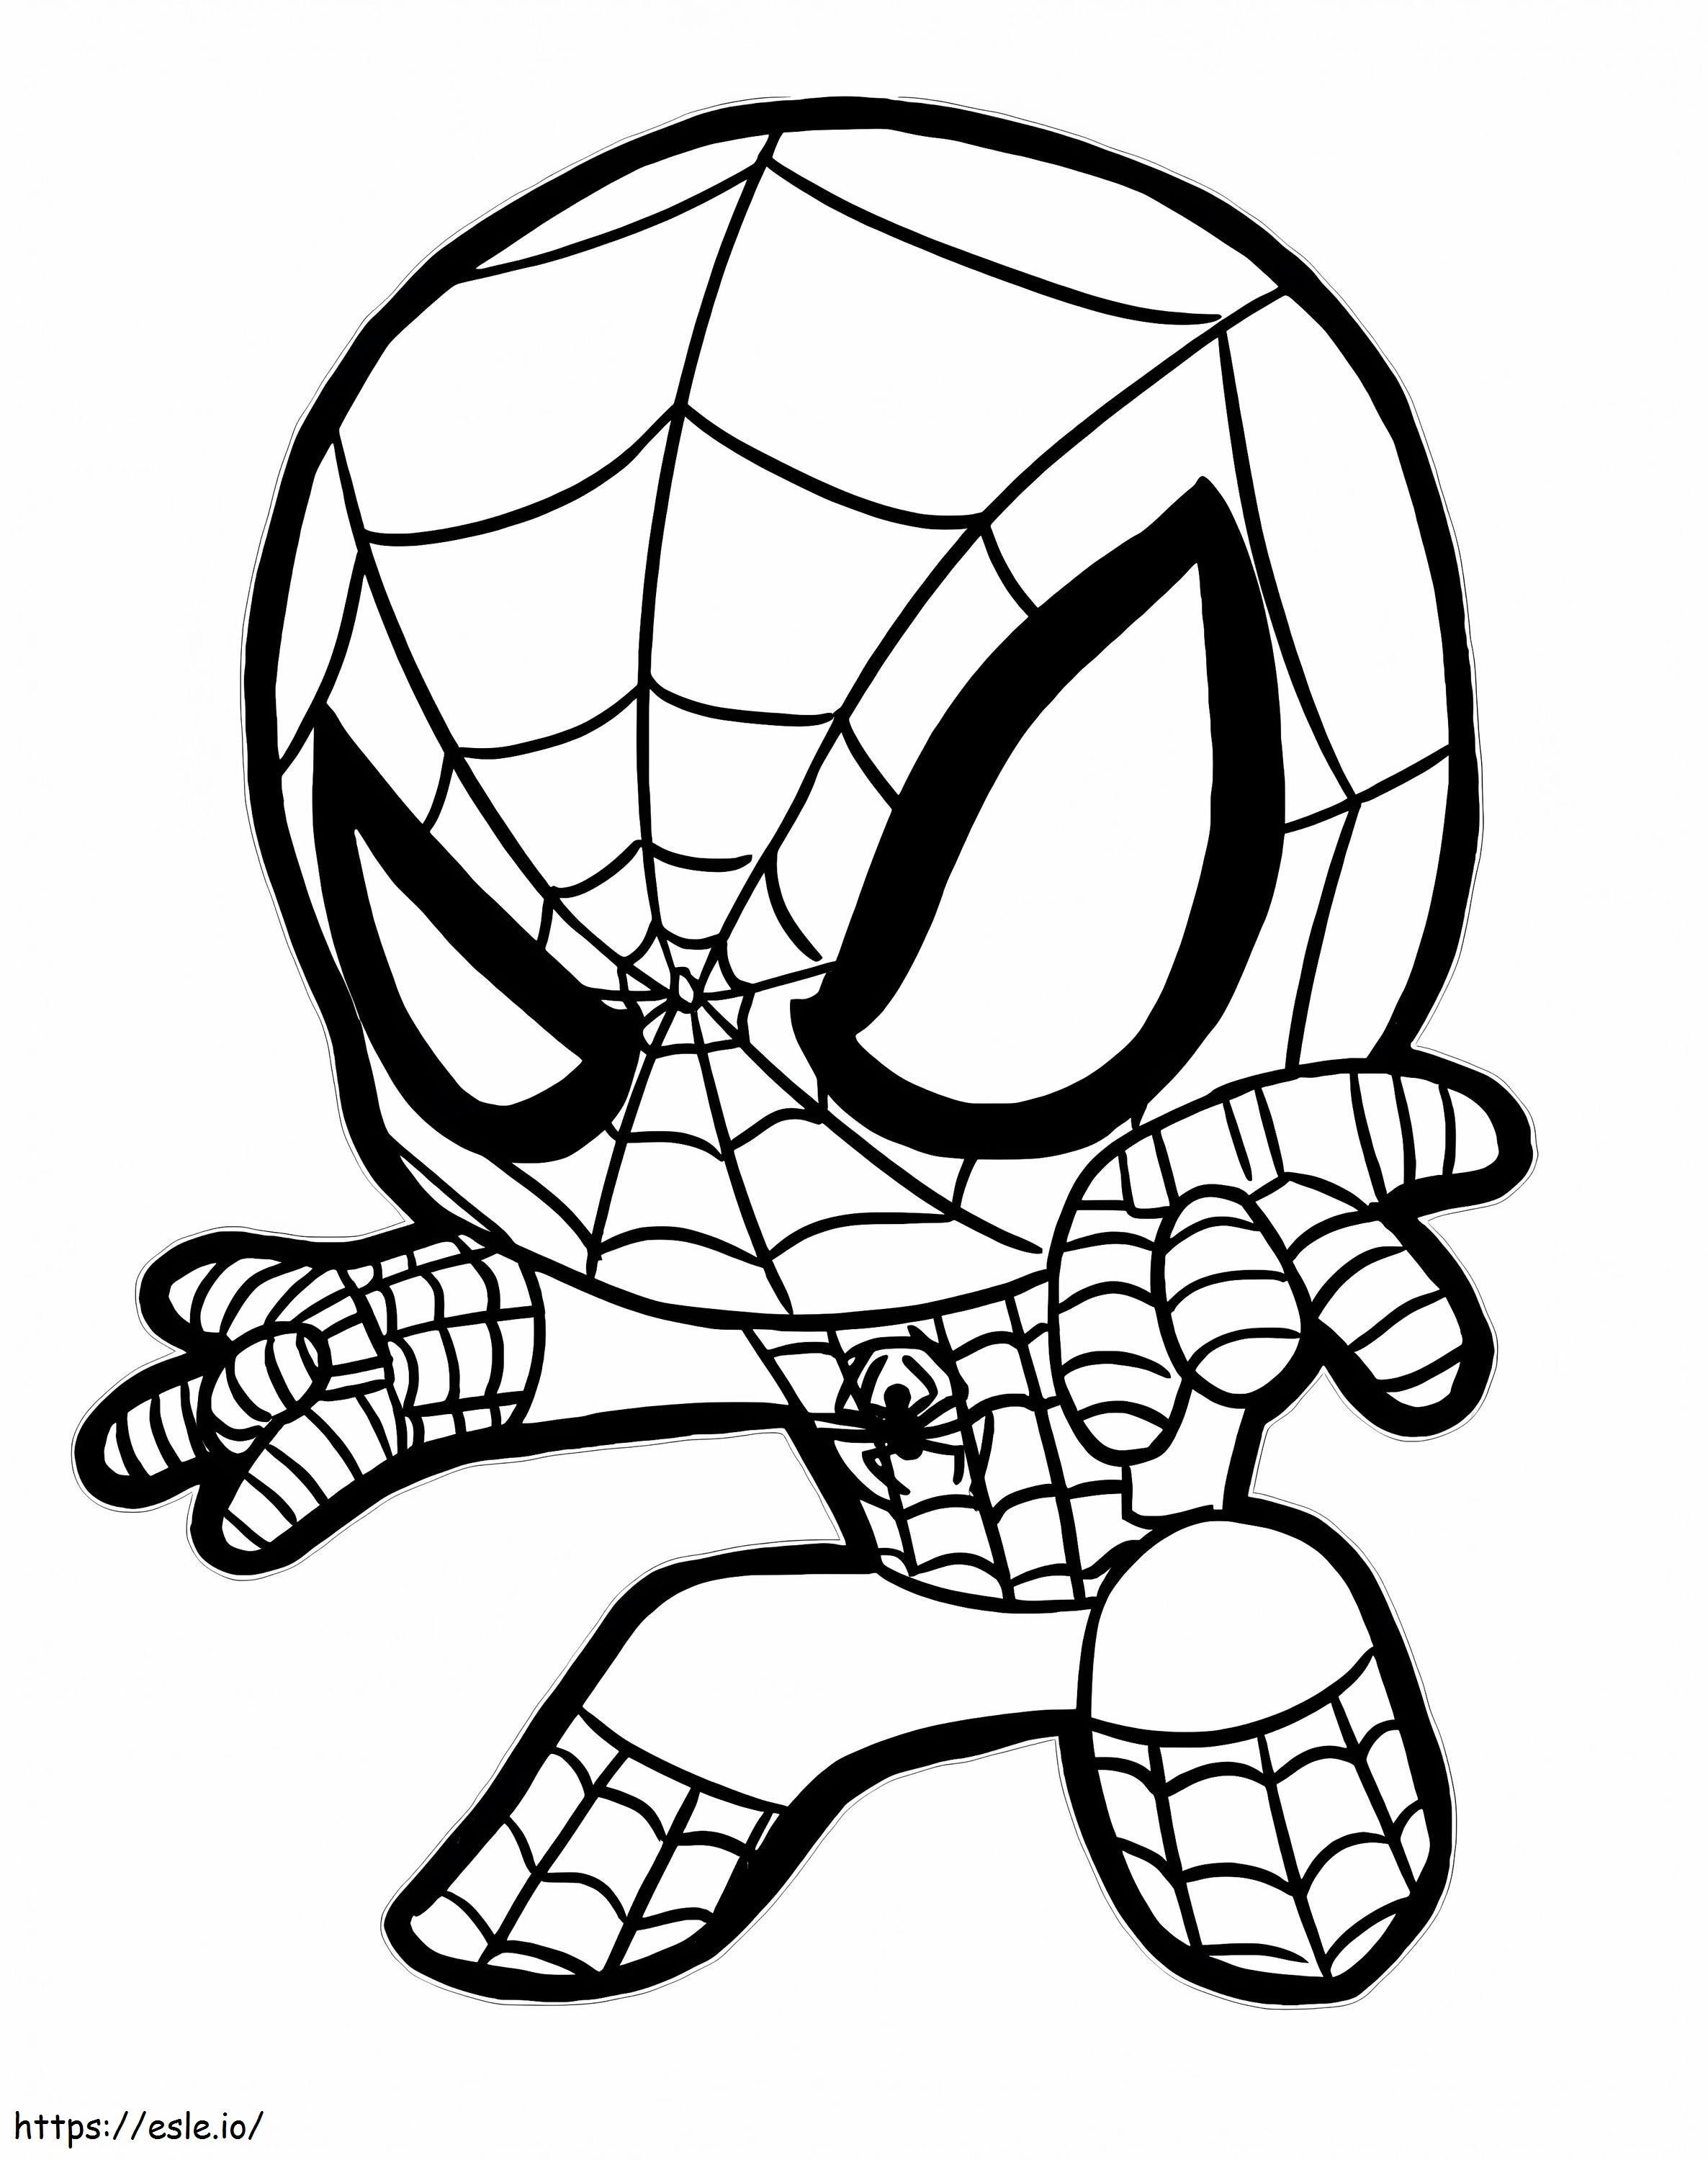 Coloriage Chibi Spiderman à imprimer dessin